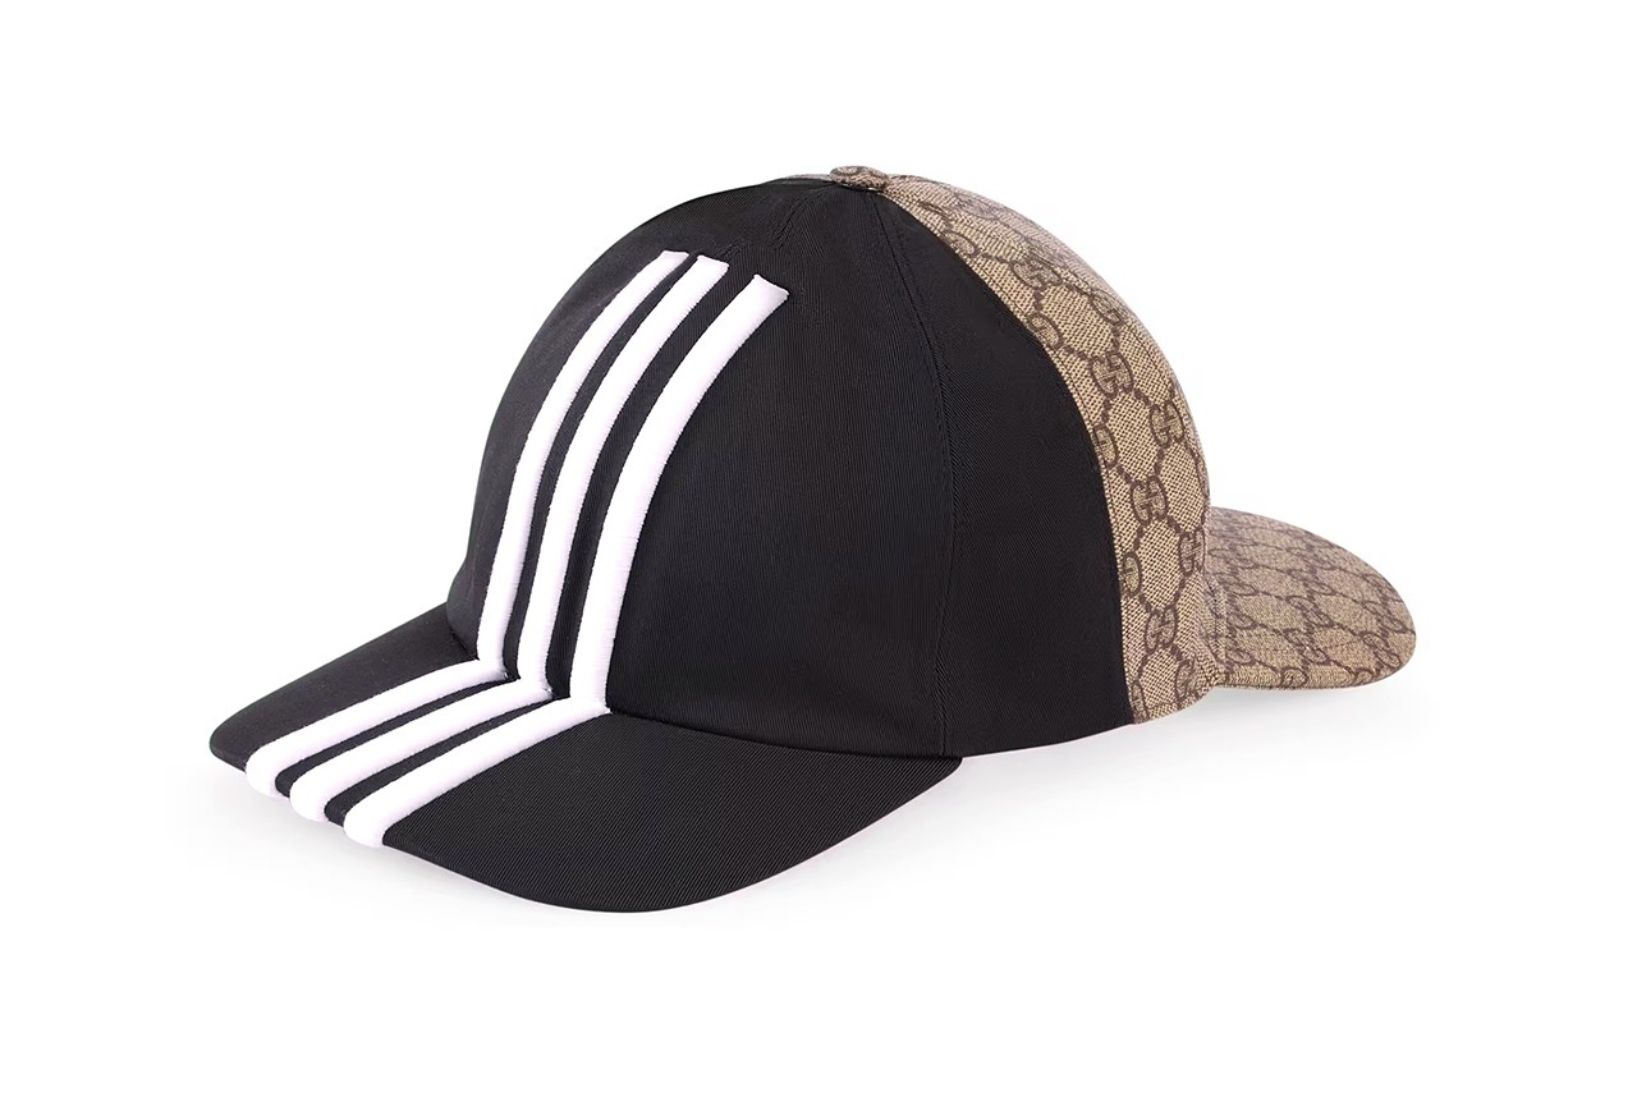 Latest adidas x Gucci launch: double-sided baseball cap - HIGHXTAR.